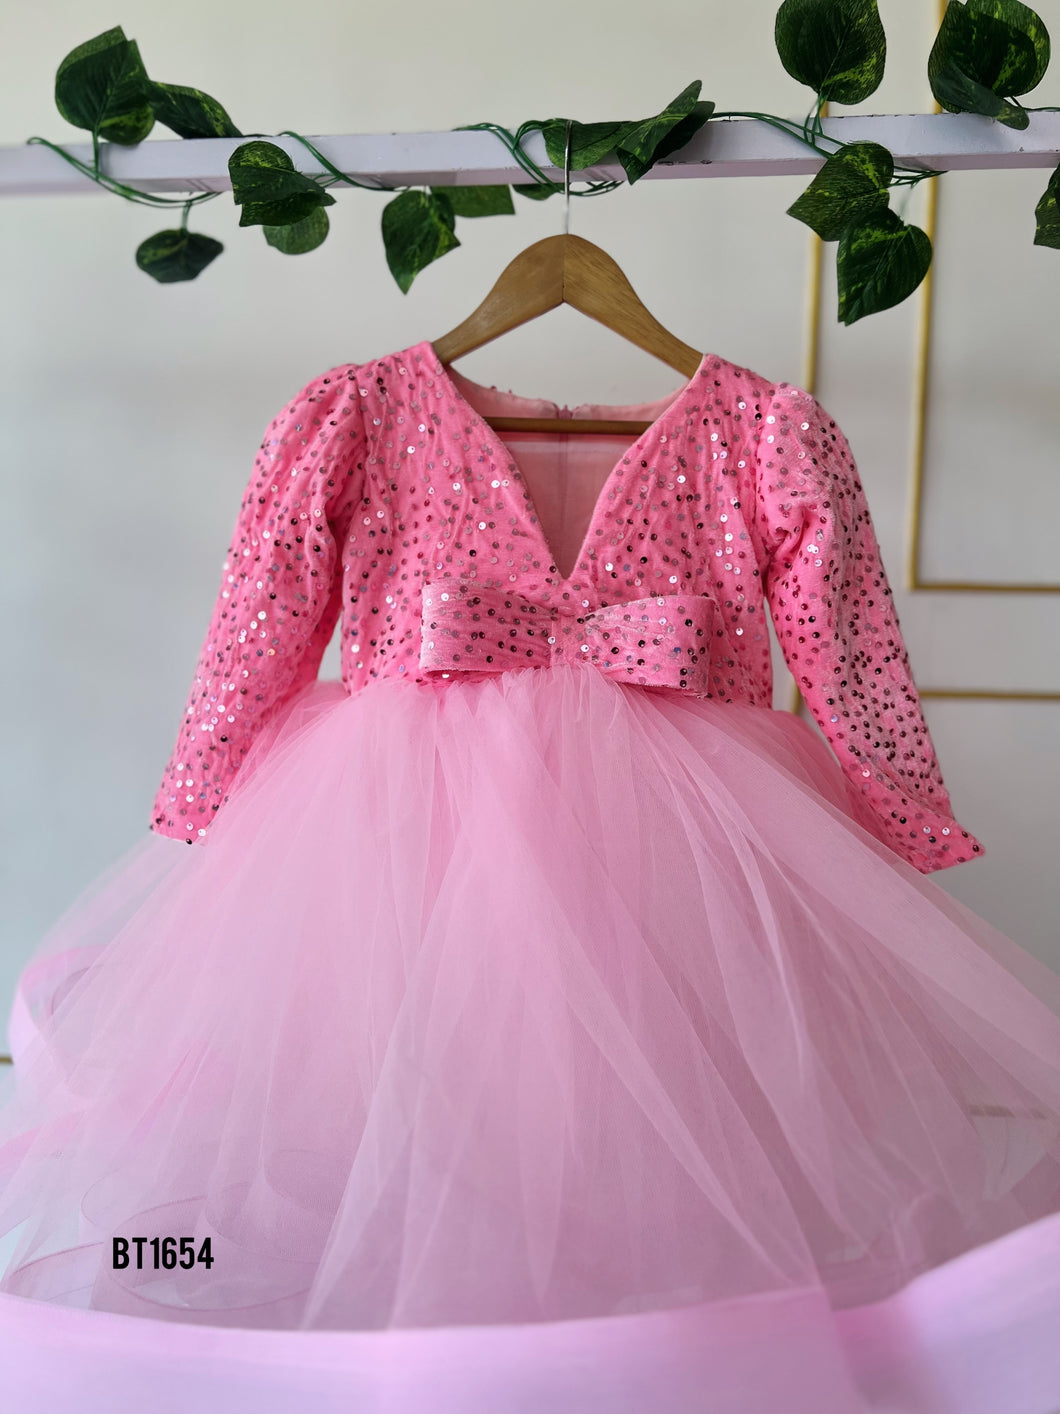 BT1654 Enchanting Pink Sequin Party Dress for Little Princesses